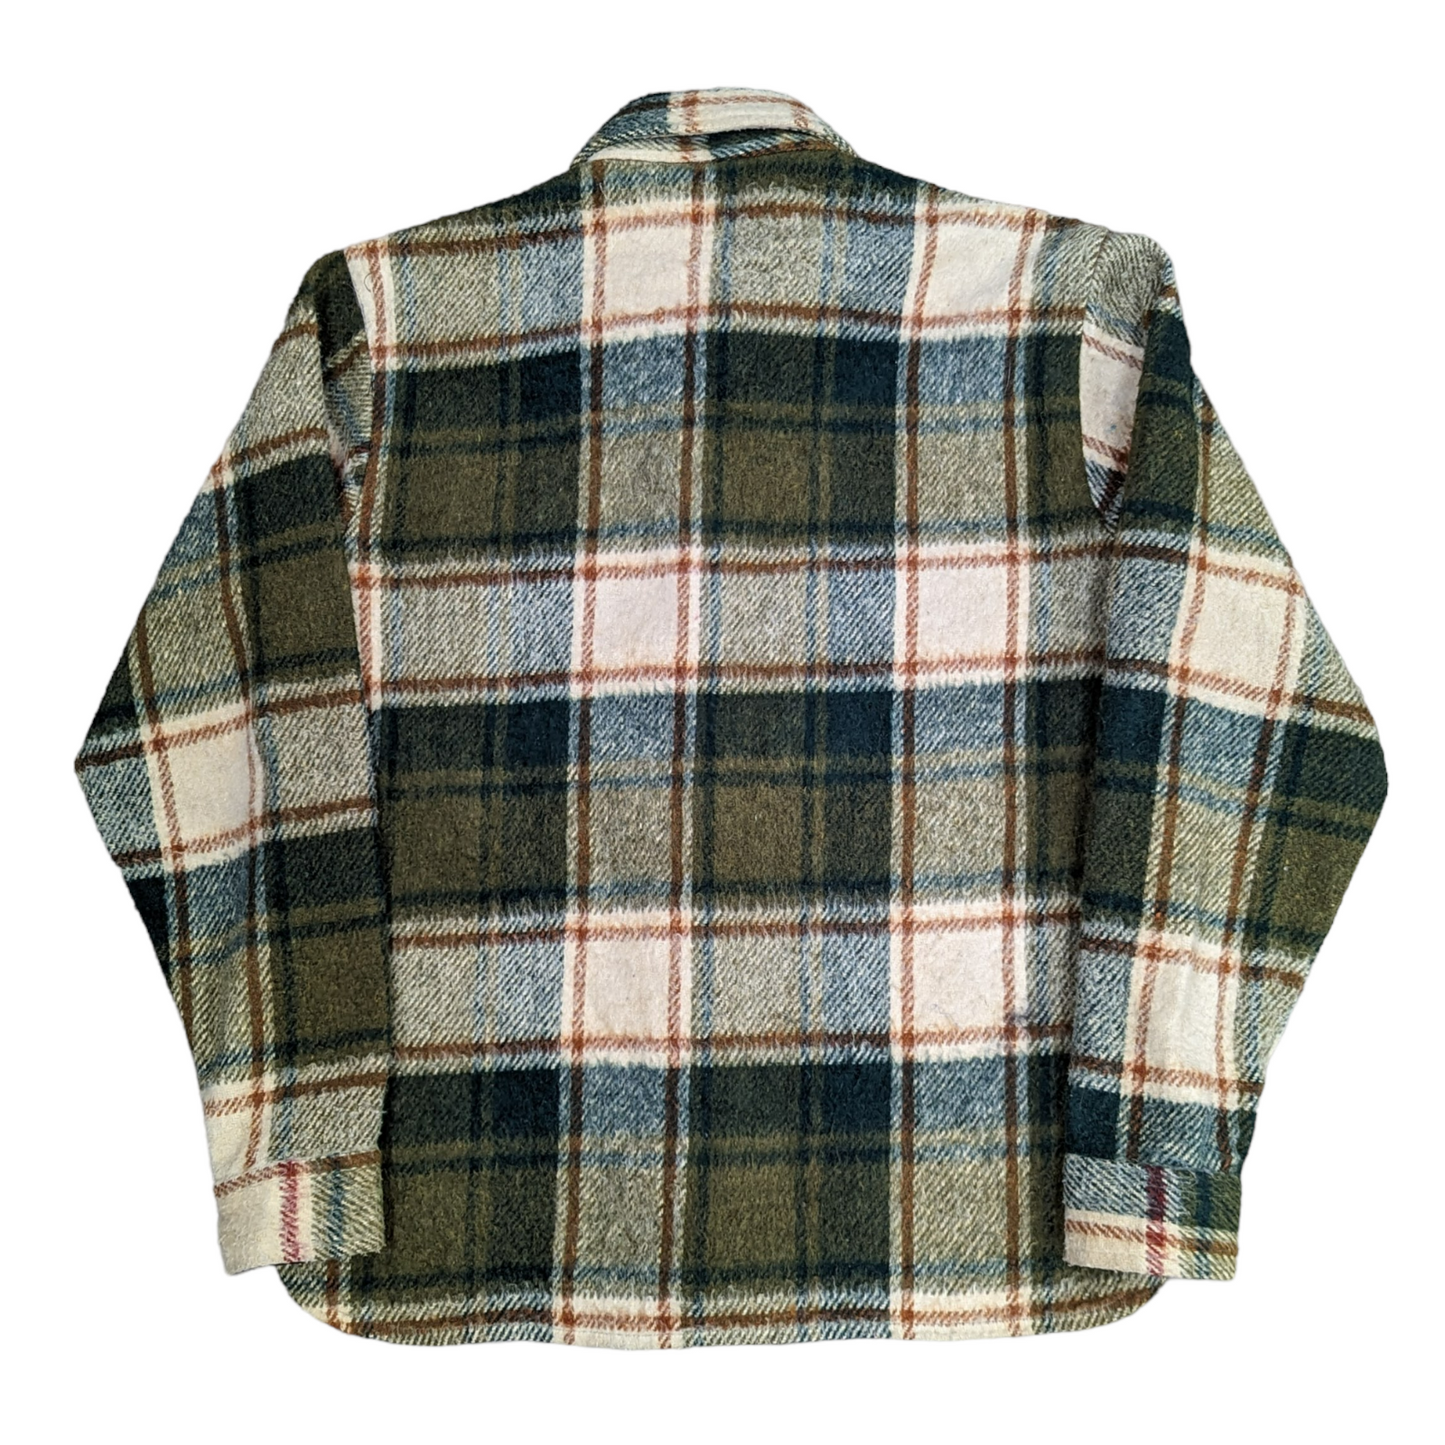 Vintage CPO Wool Blend Shirt Size XS/S